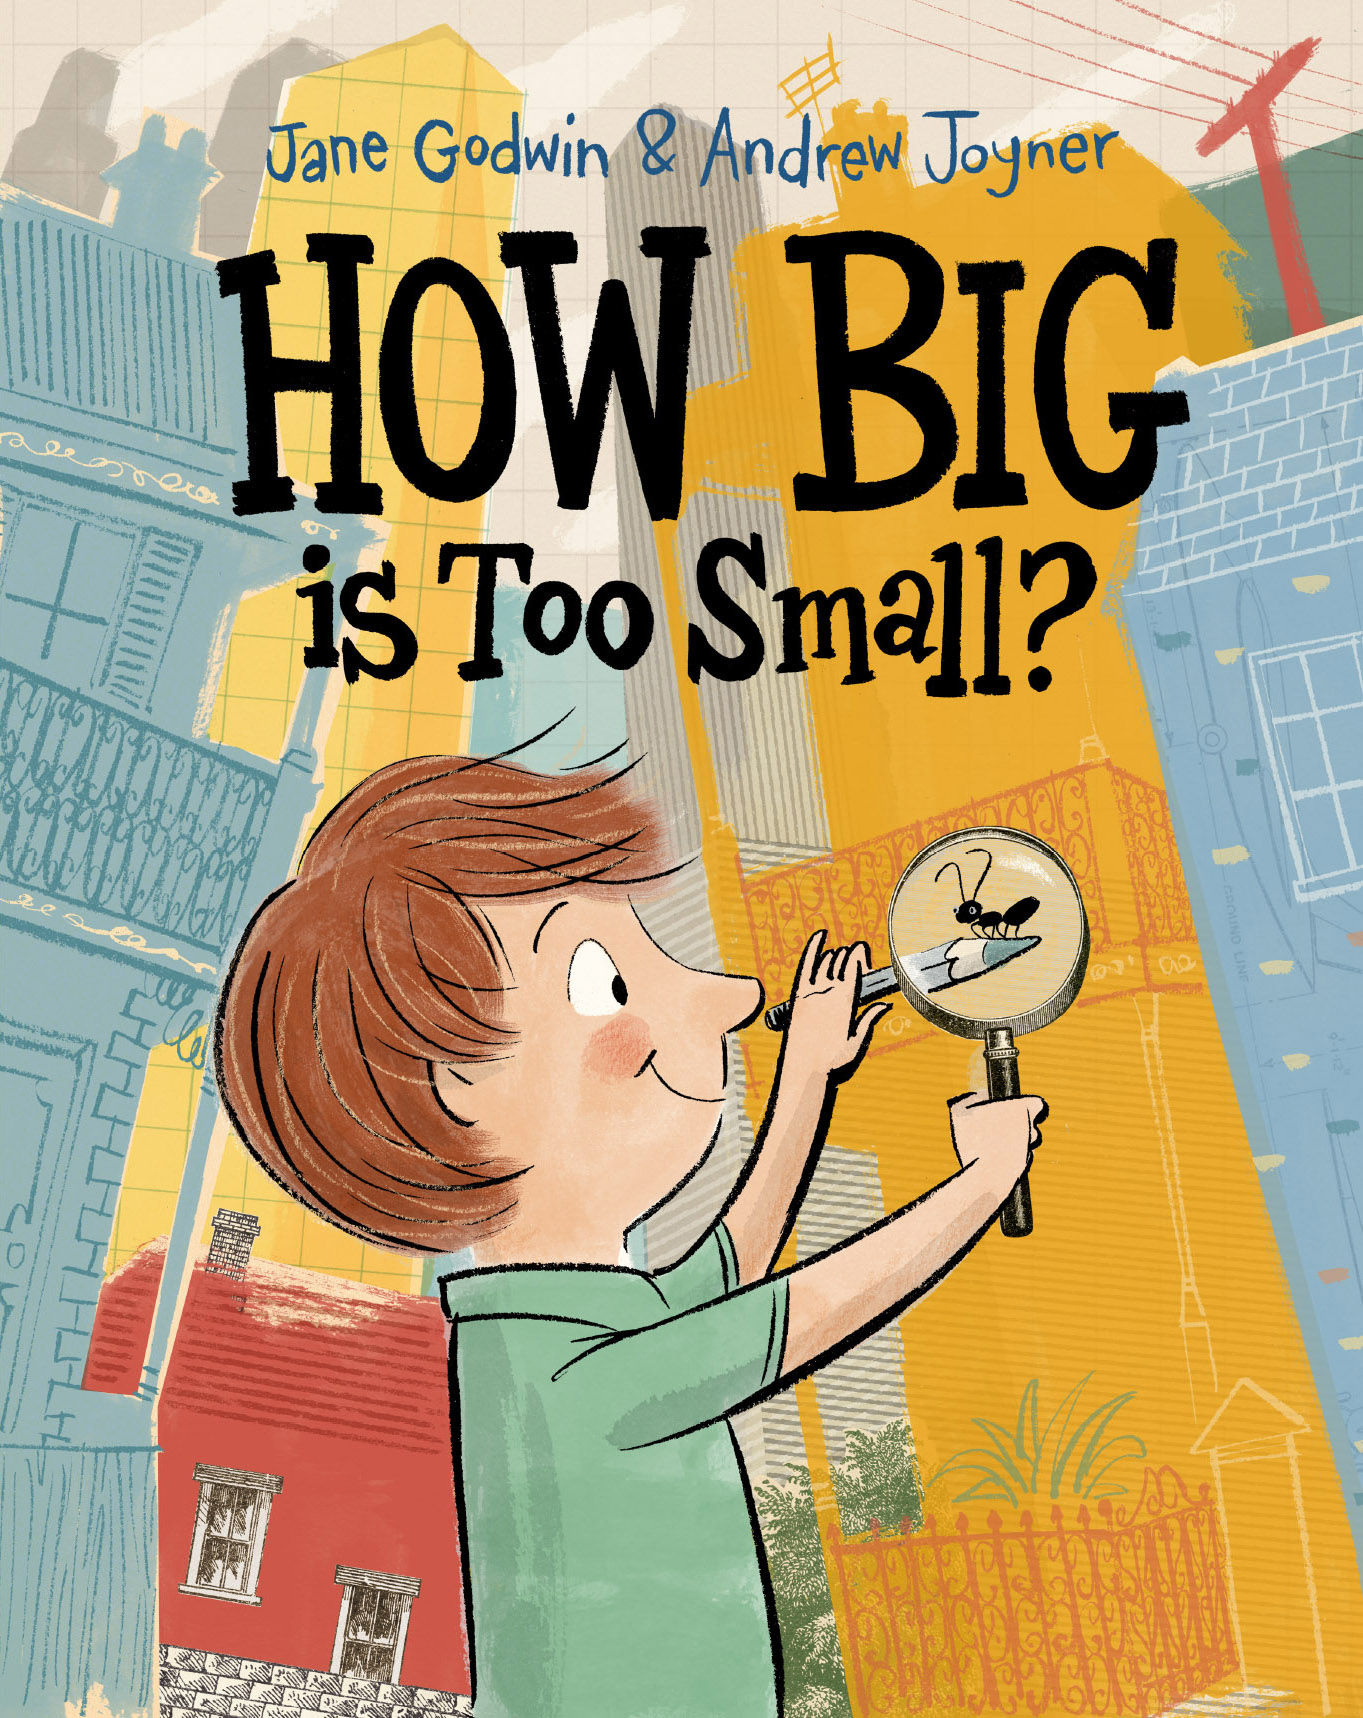 How Big is Too Small? — Andrew Joyner